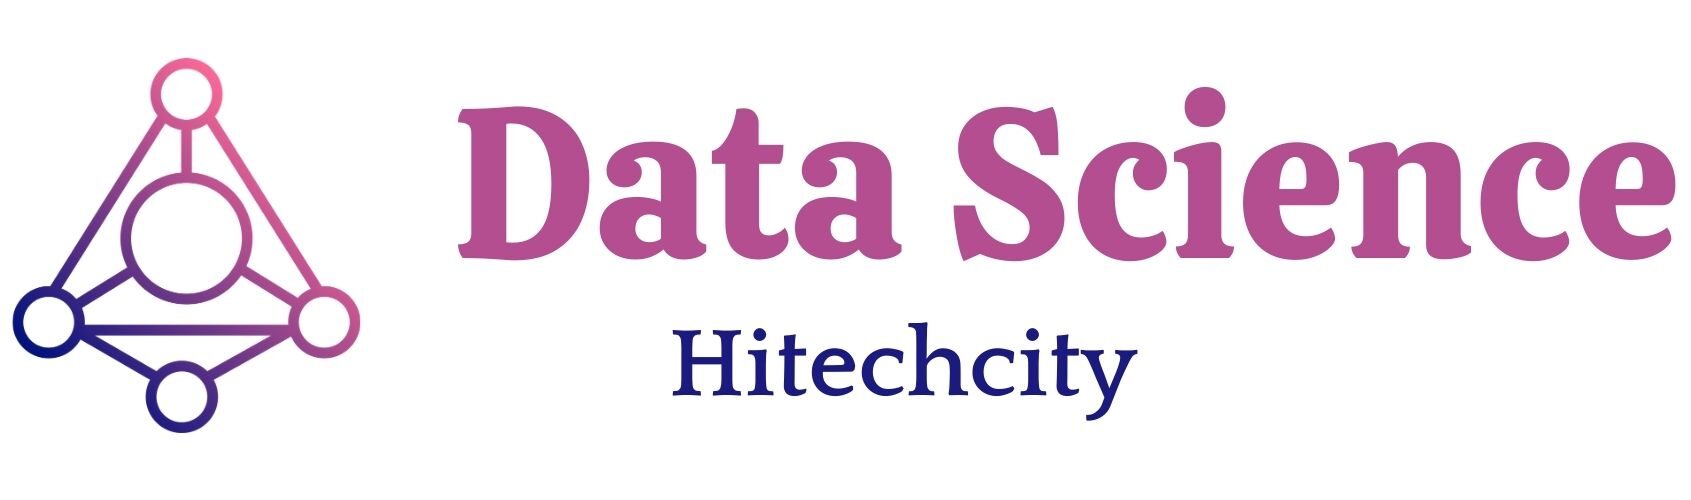 Data Science Hitechcity